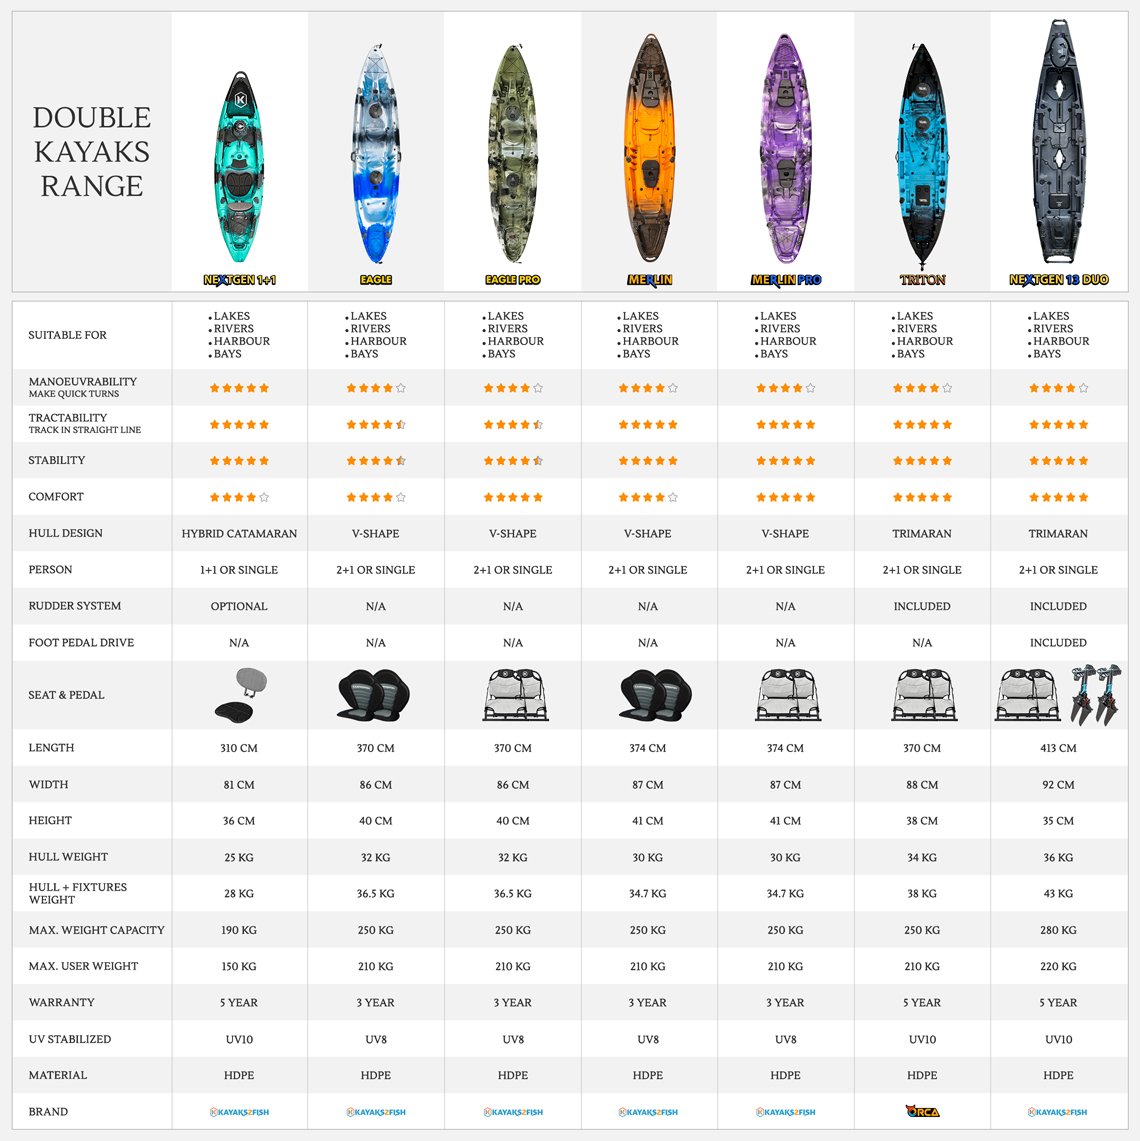 Comparison of Kayak Types